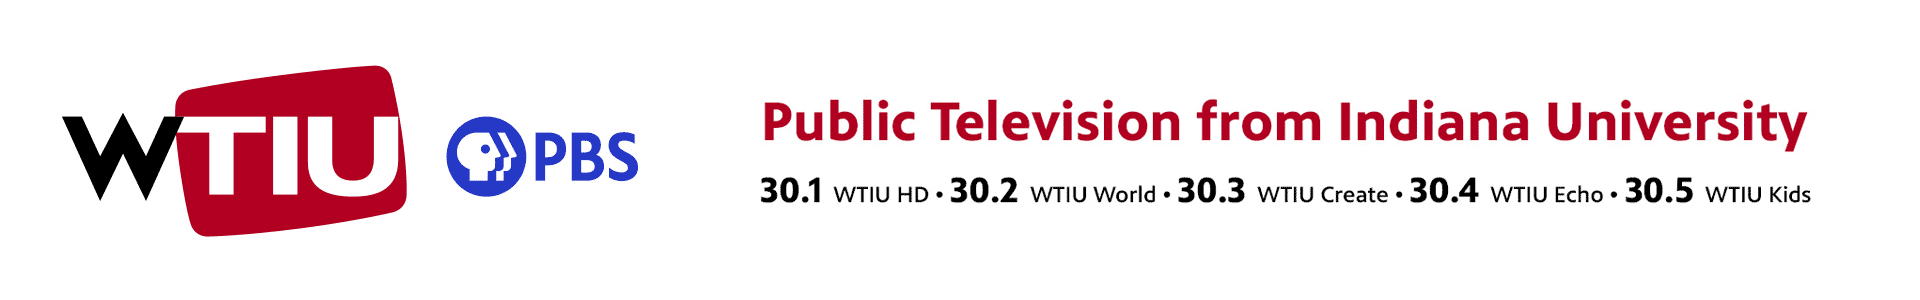 WTIU PBS - Public Television From Indiana University